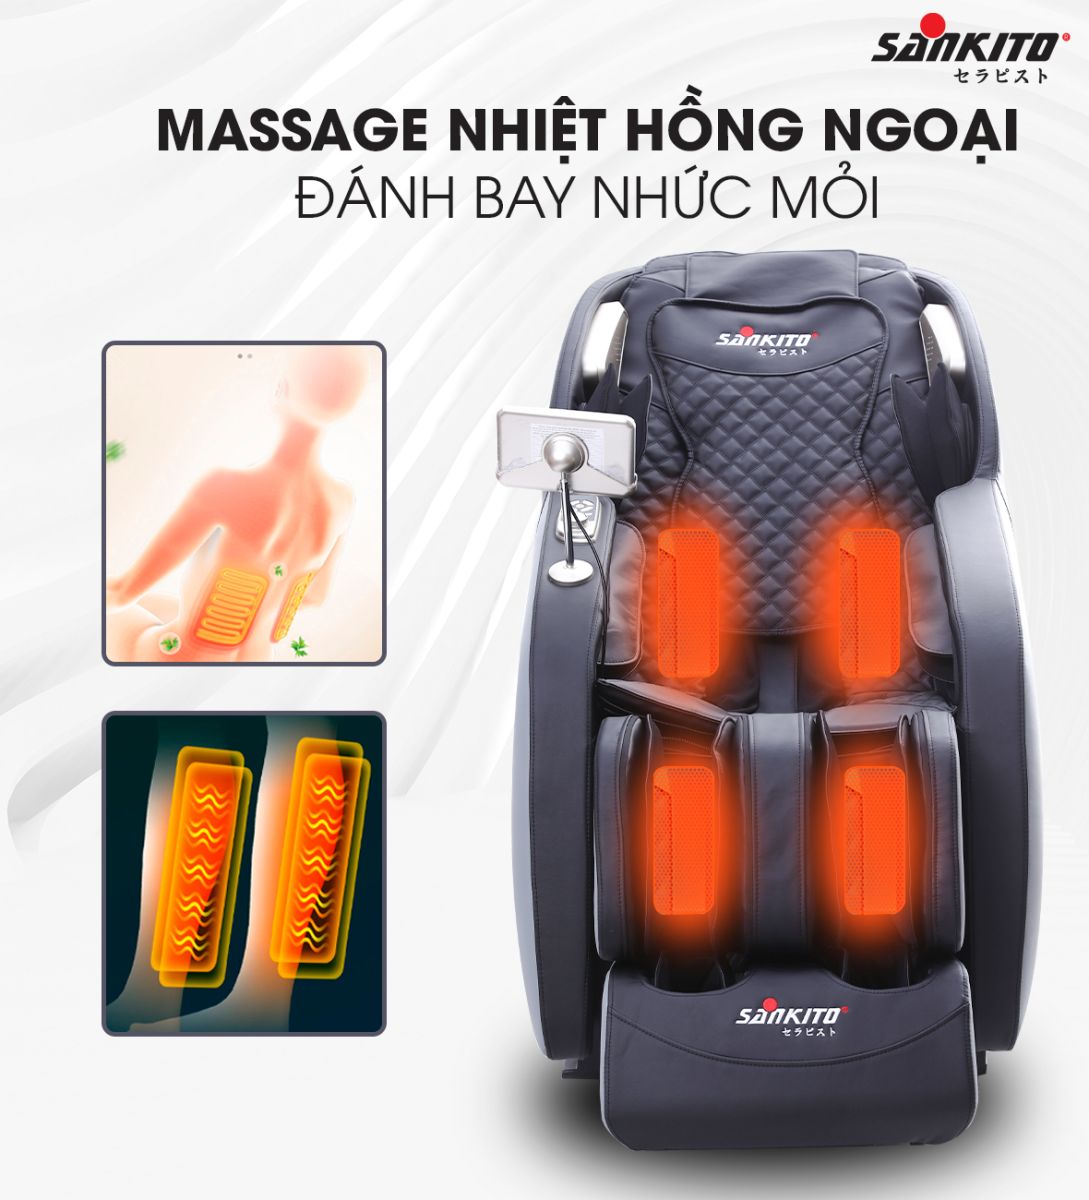 Ghế massage Sankito S-60 Plus Massage nhiệt hồng ngoại cải tiến